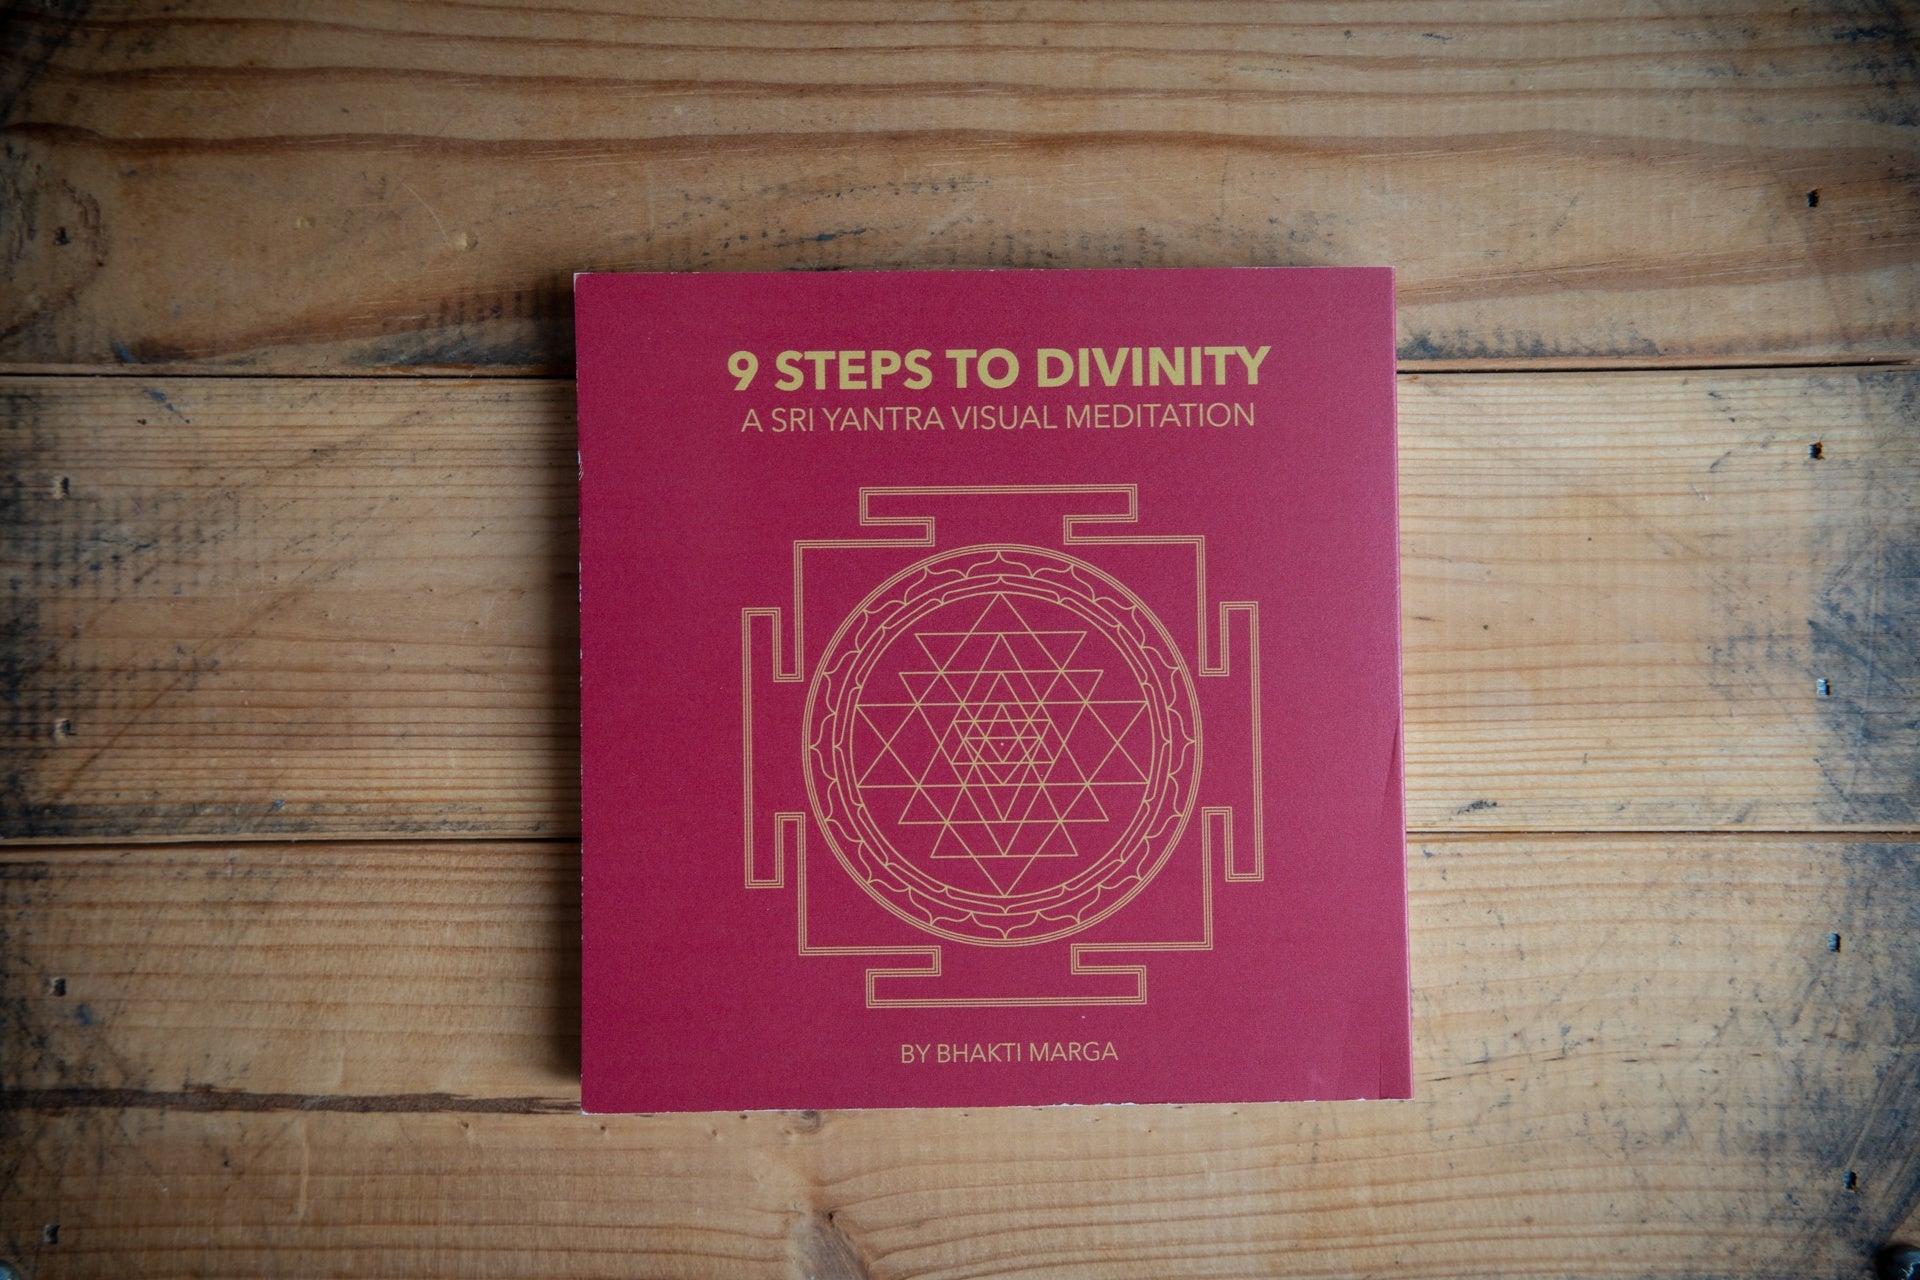 Sri Yantra Visual Meditation. 9 Steps to Divinity. Booklet